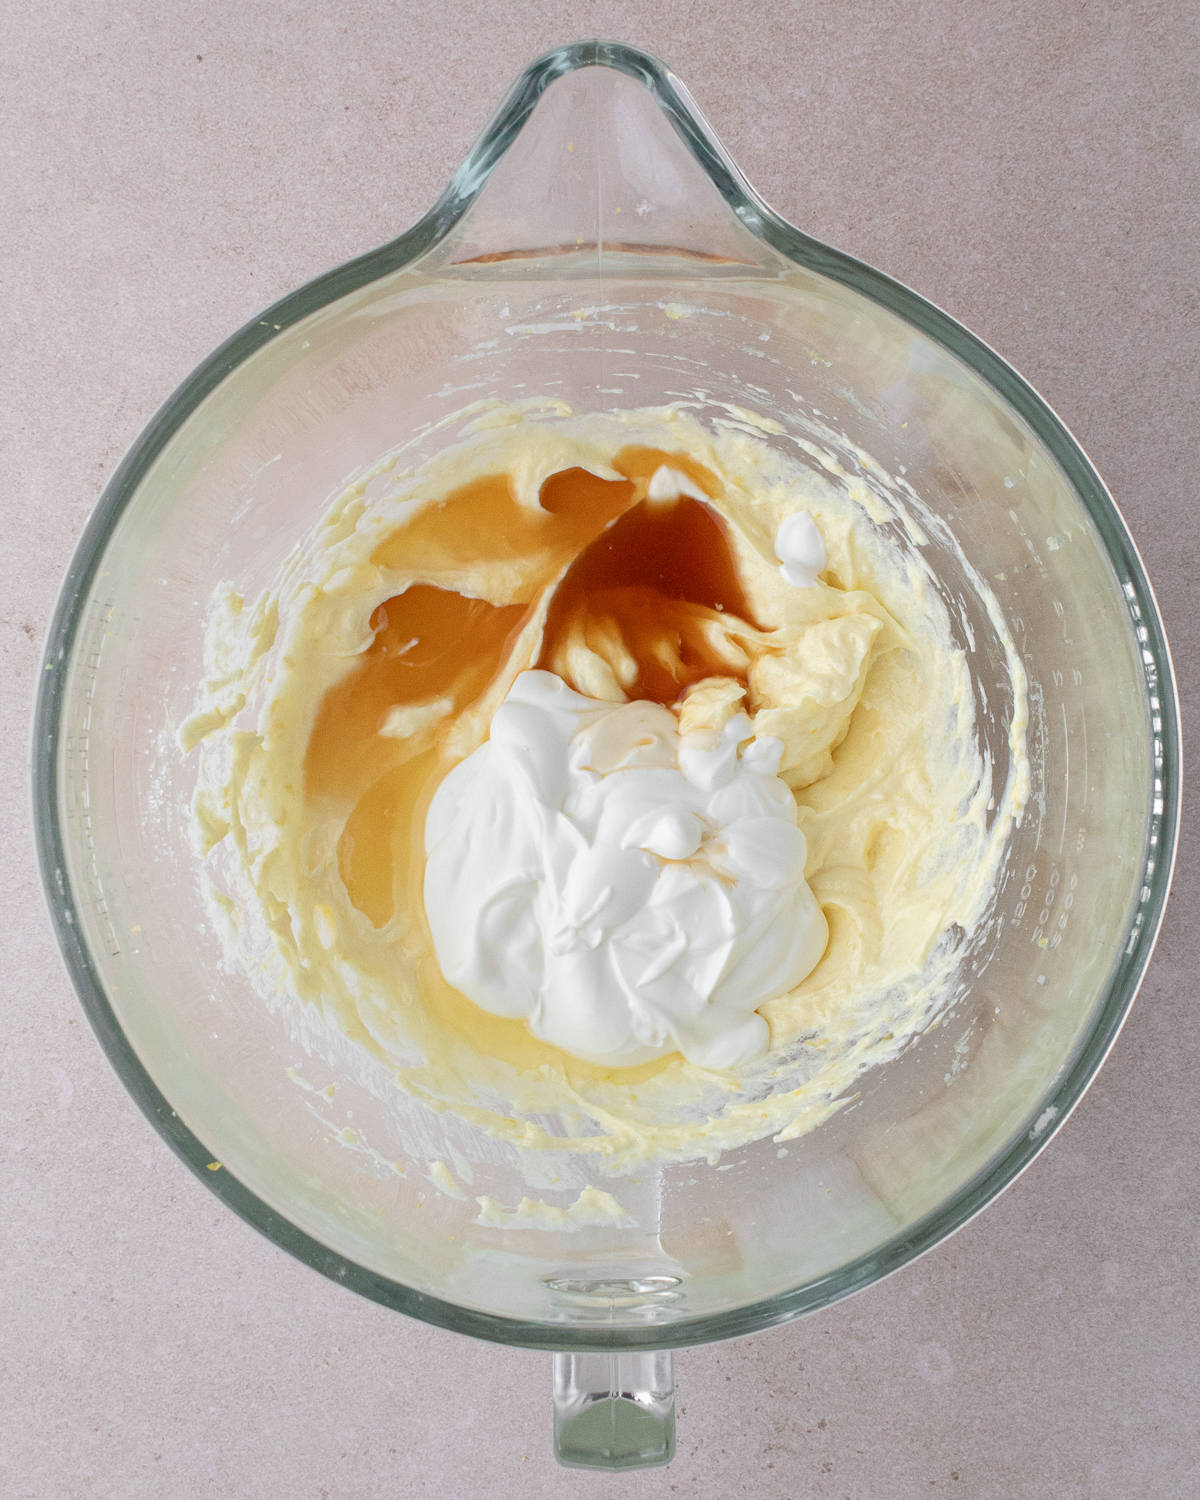 Greek yogurt, lemon juice and vanilla are added to egg/sugar mixture